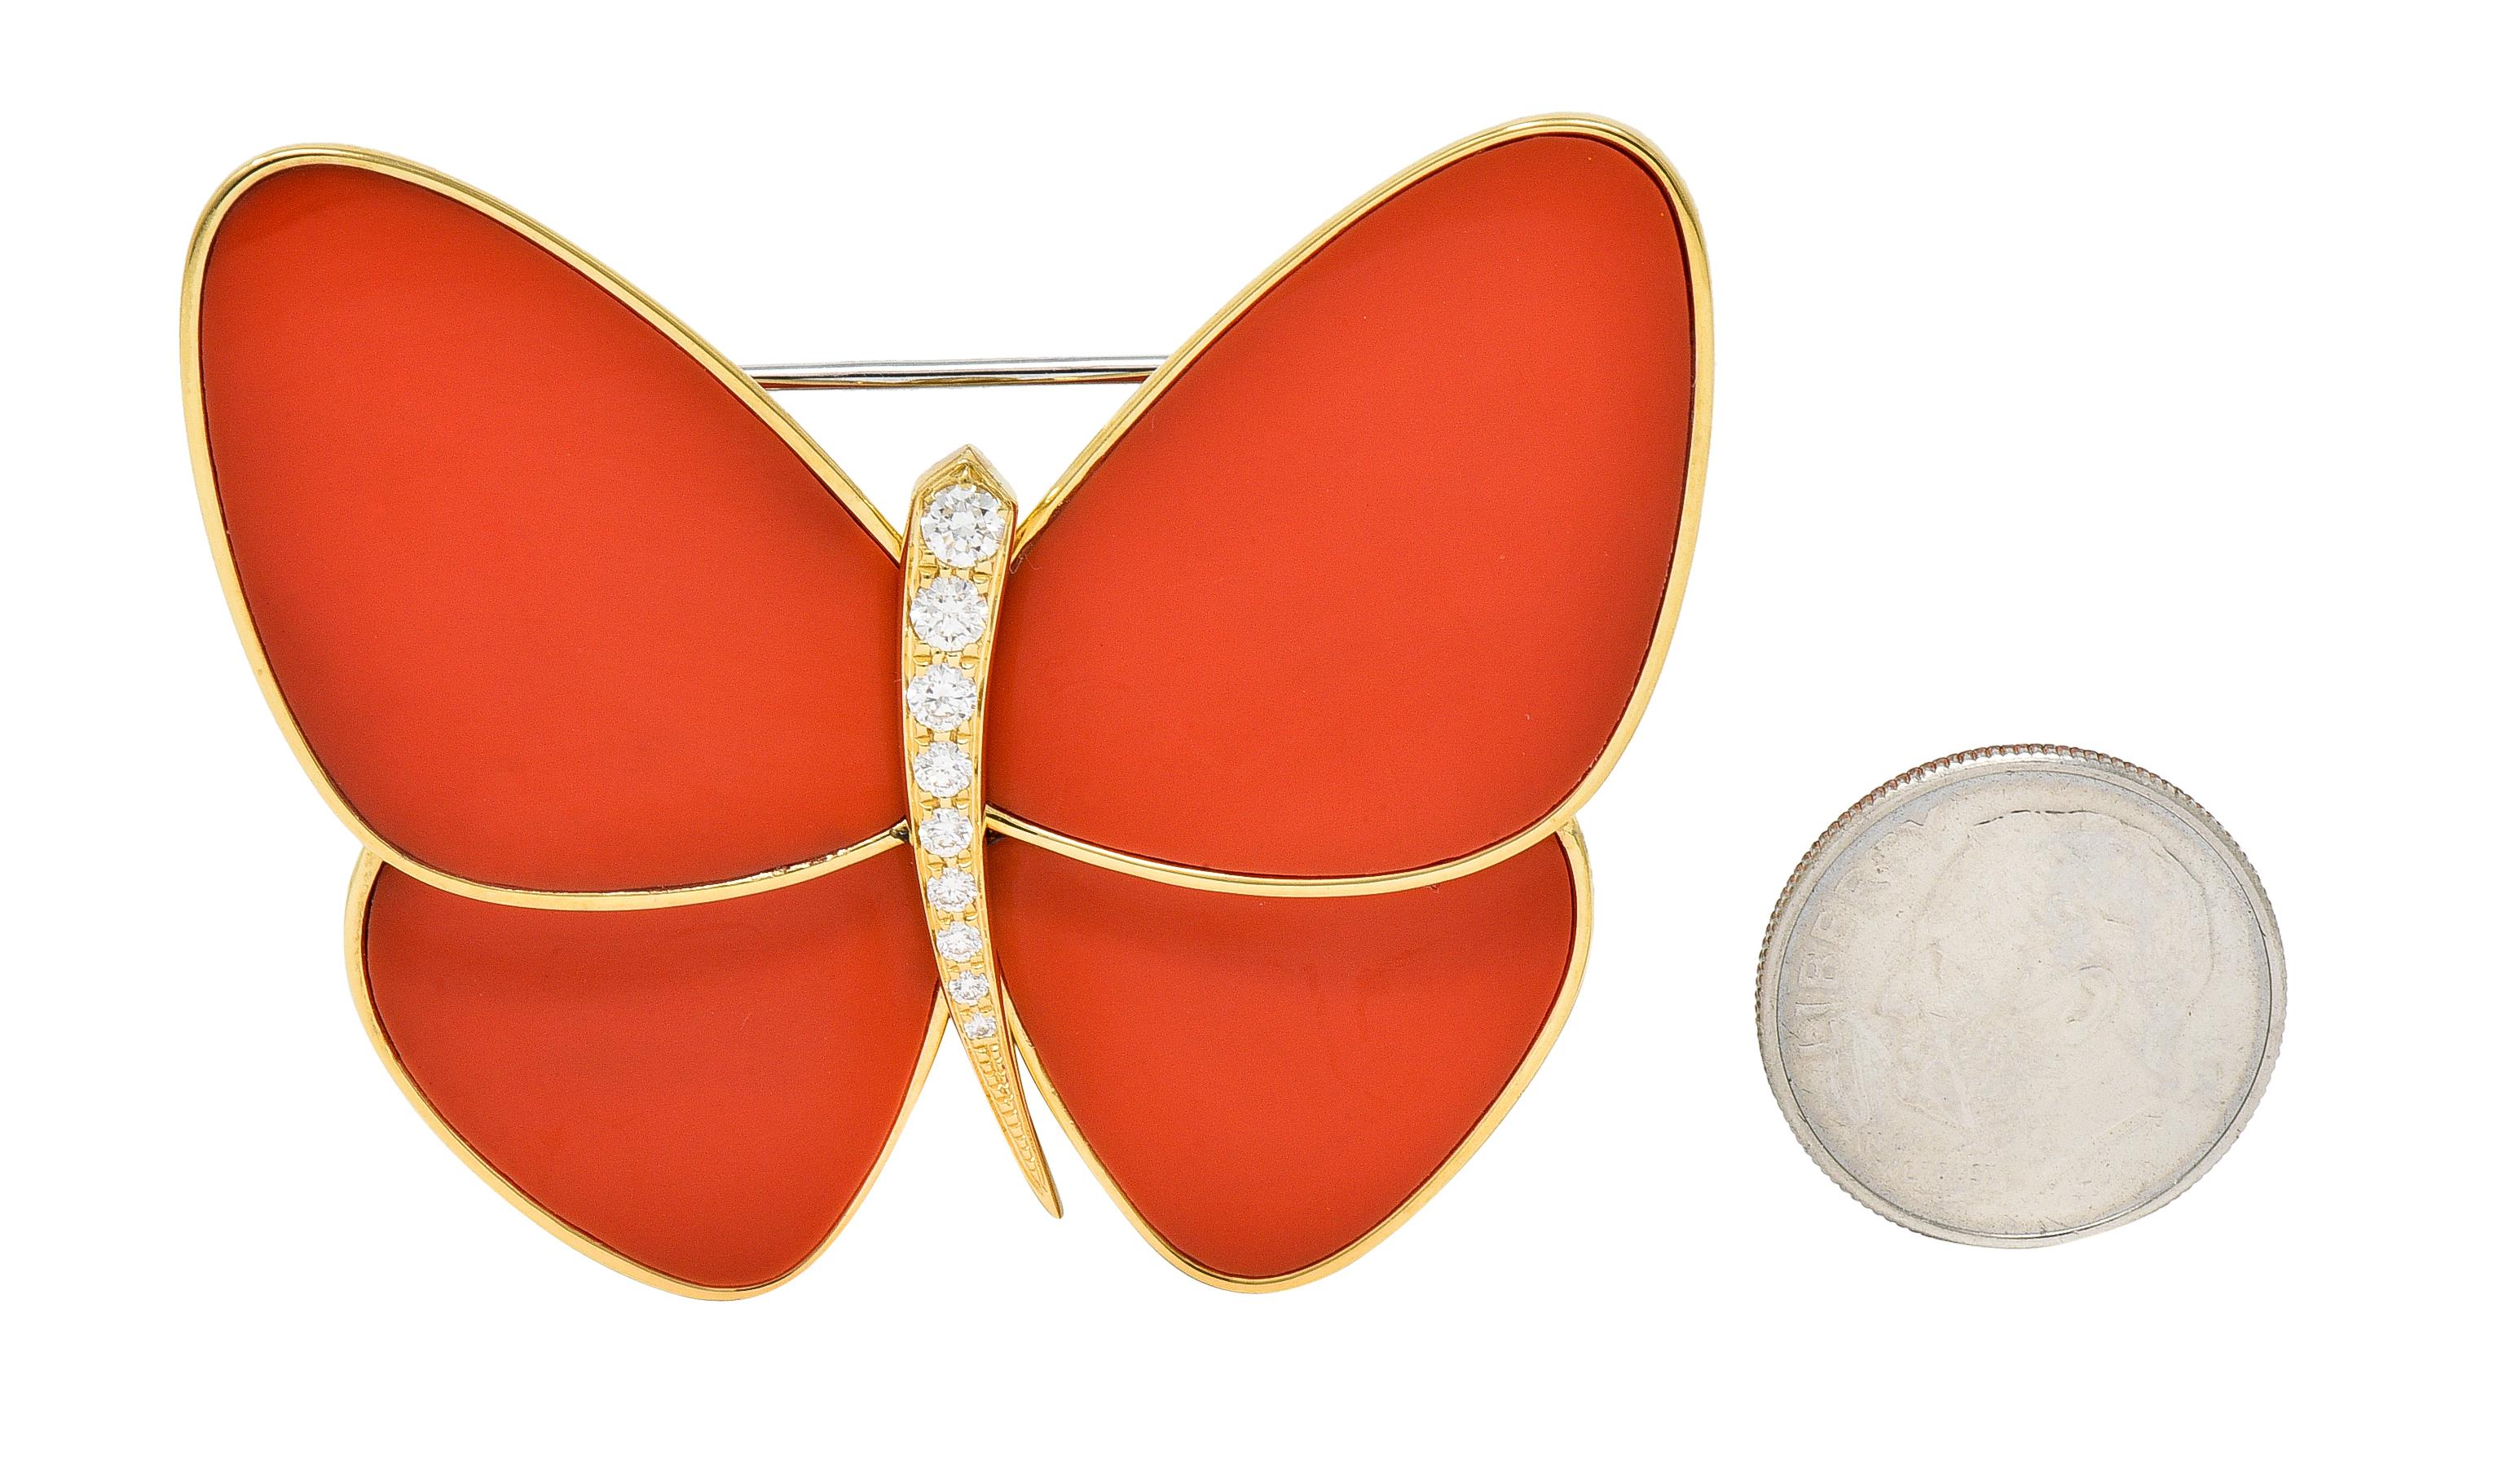 Van Cleef & Arpels Coral Diamond 18 Karat Yellow Gold Papillon Butterfly Brooch 1